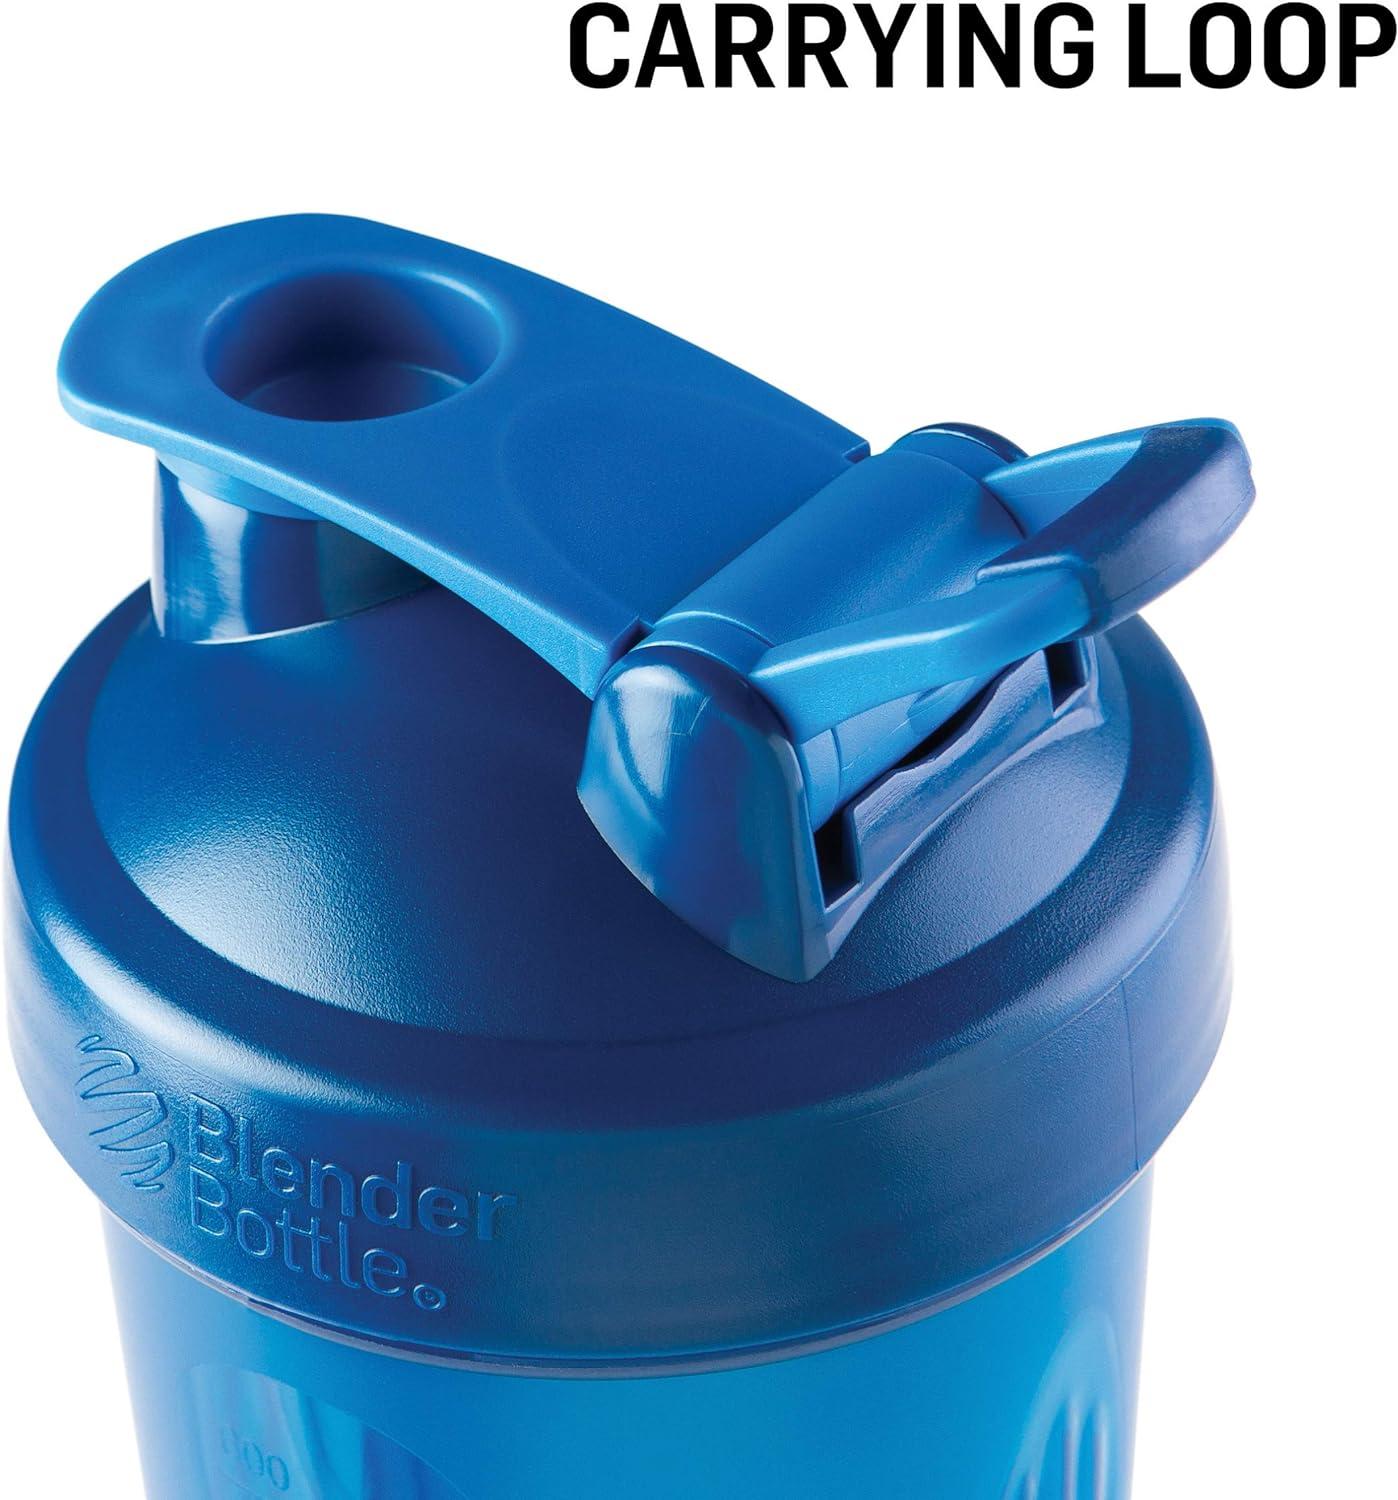 Blender Bottle Pro Series 32 oz. Shaker Mixer Cup with Loop Top